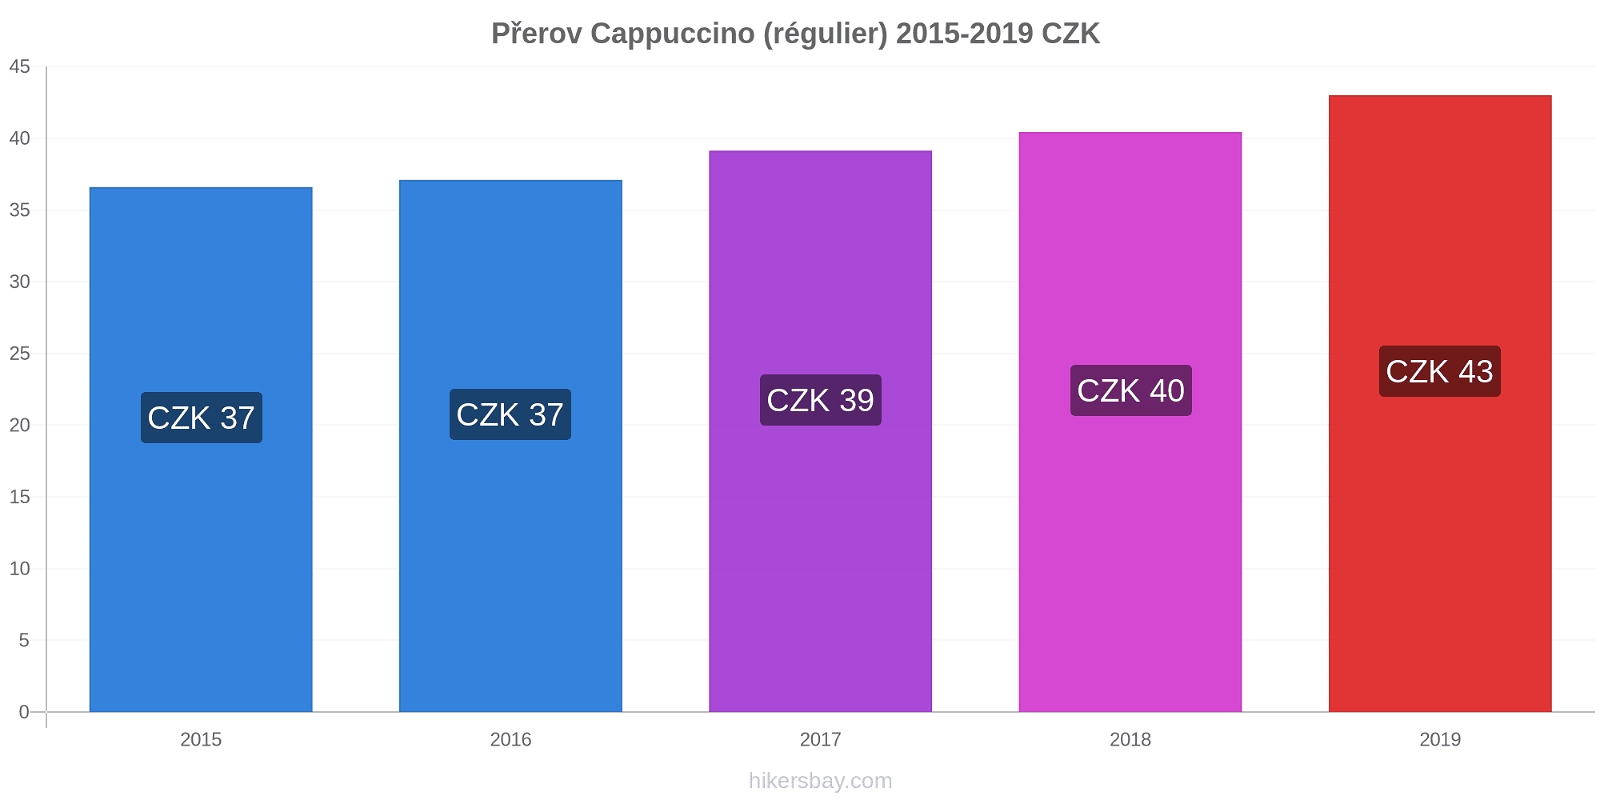 Přerov changements de prix Cappuccino (régulier) hikersbay.com